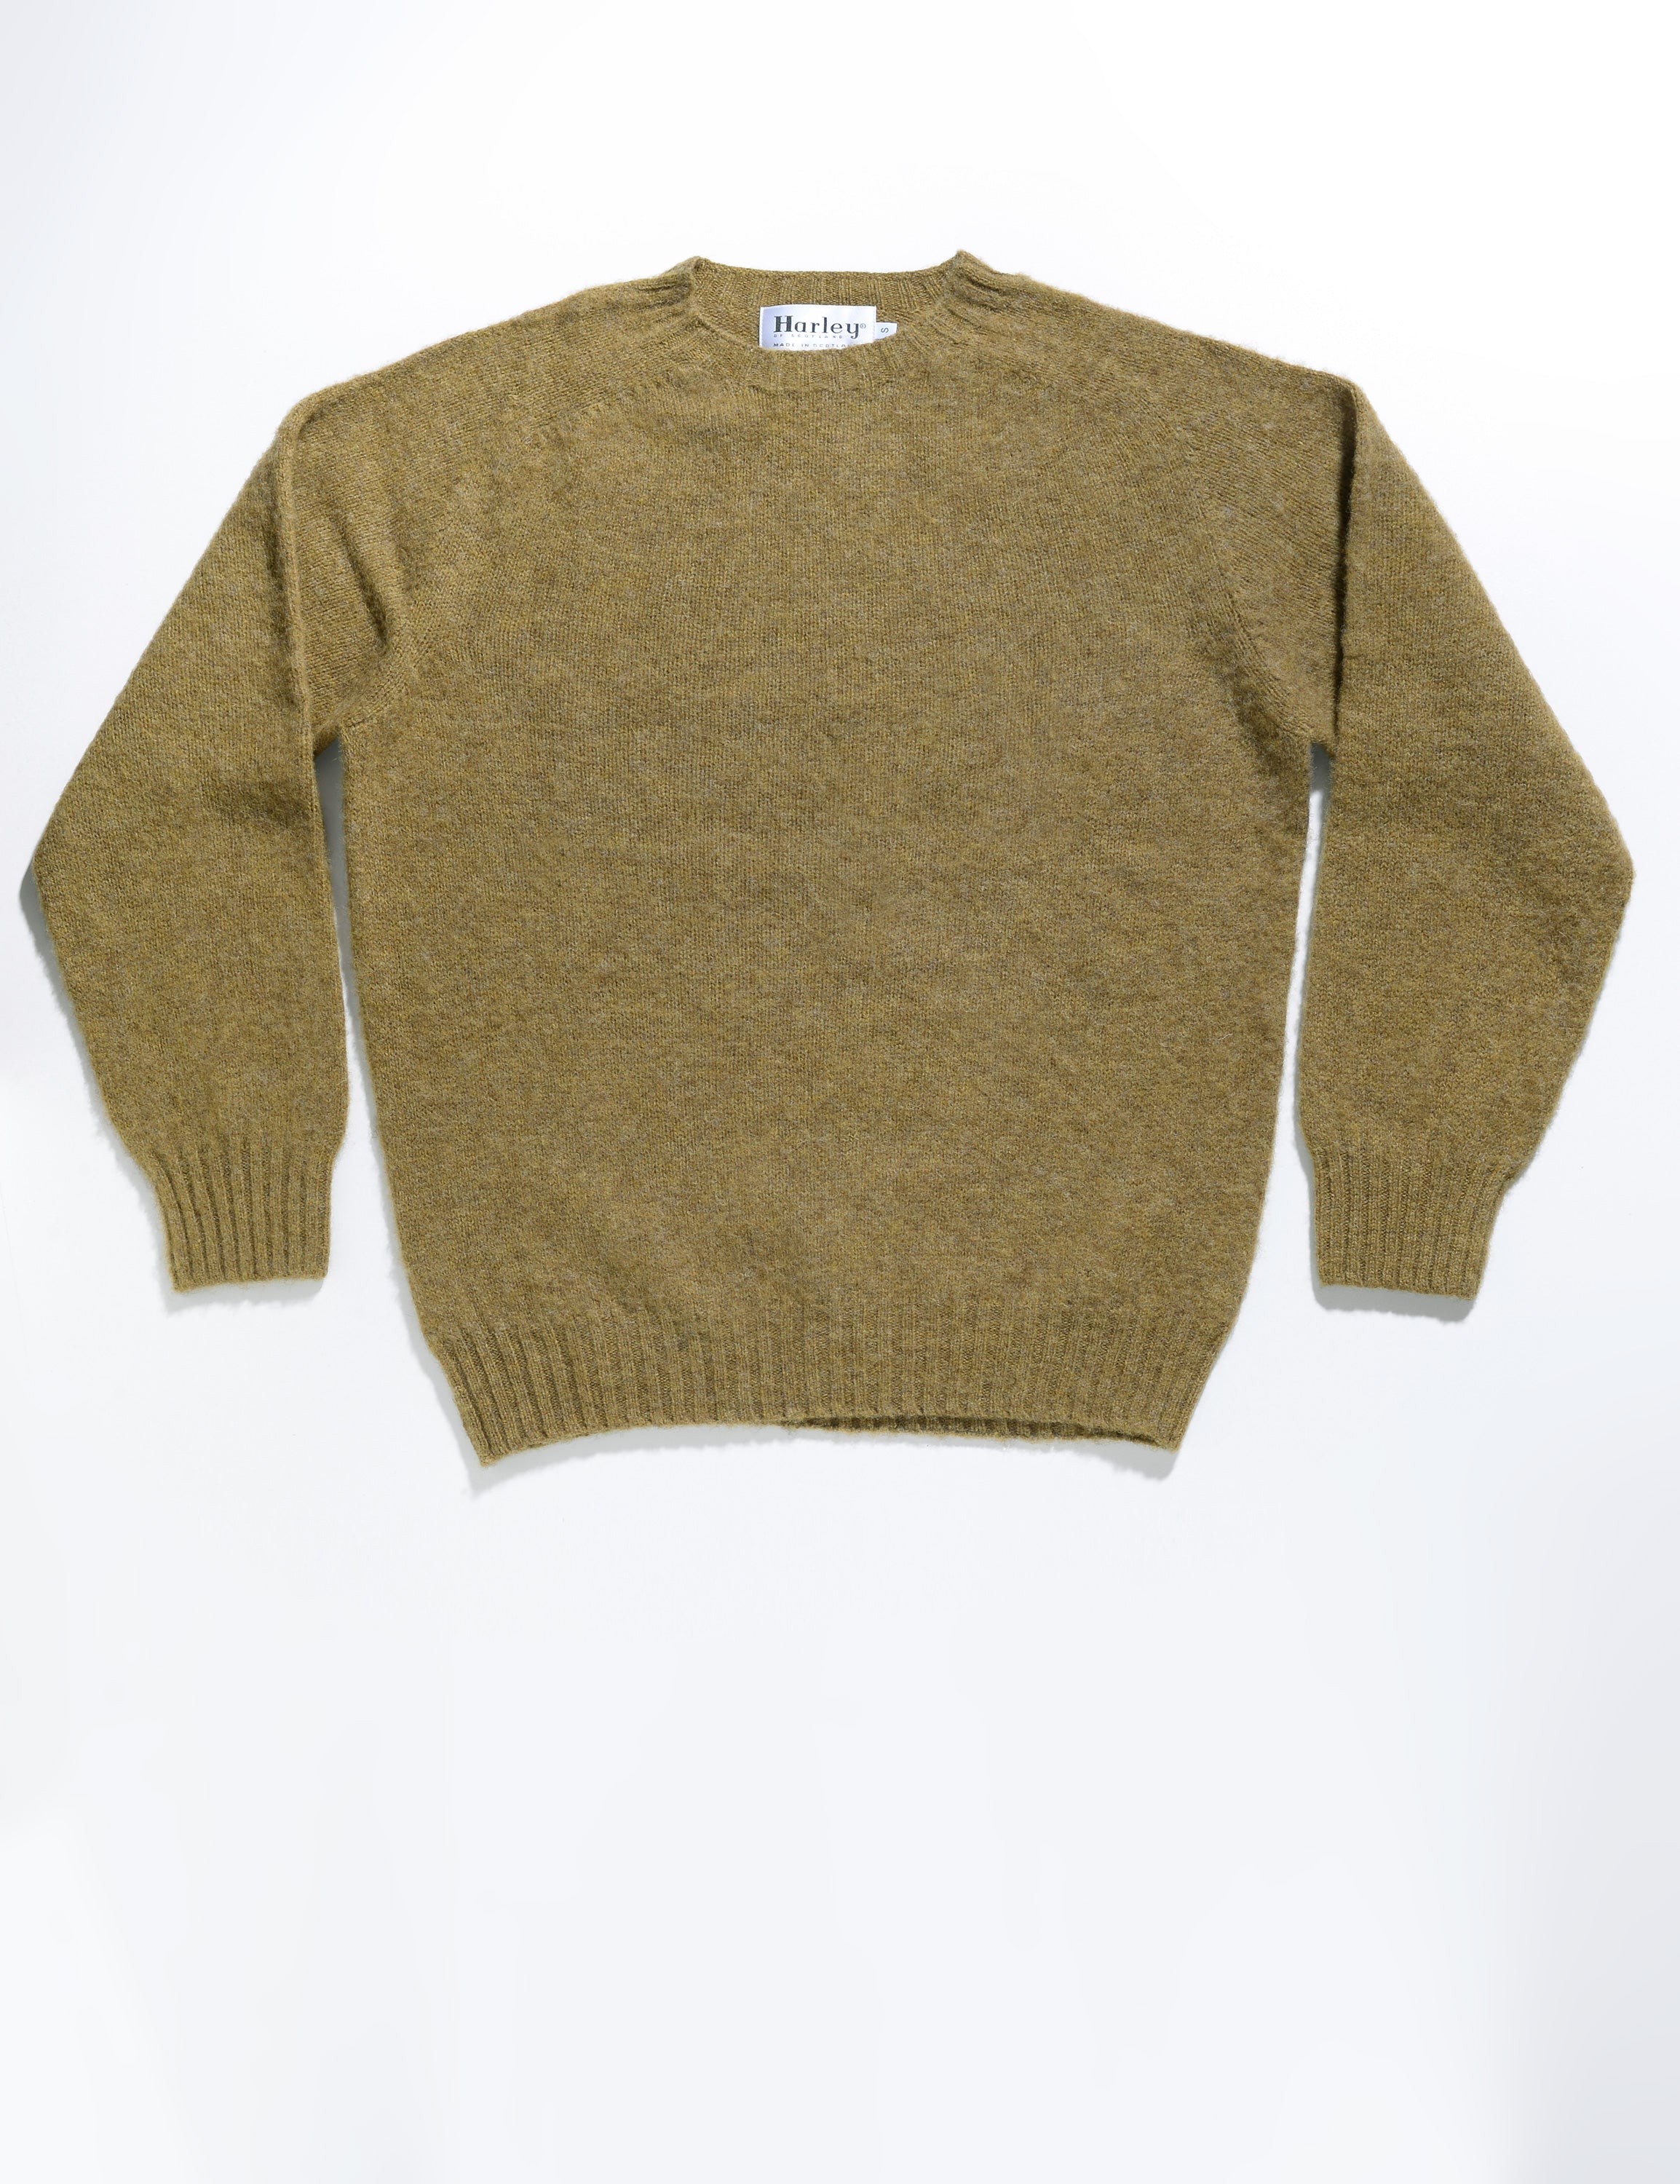 Classic Fit Shaggy Shetland Sweater - Warm Olive